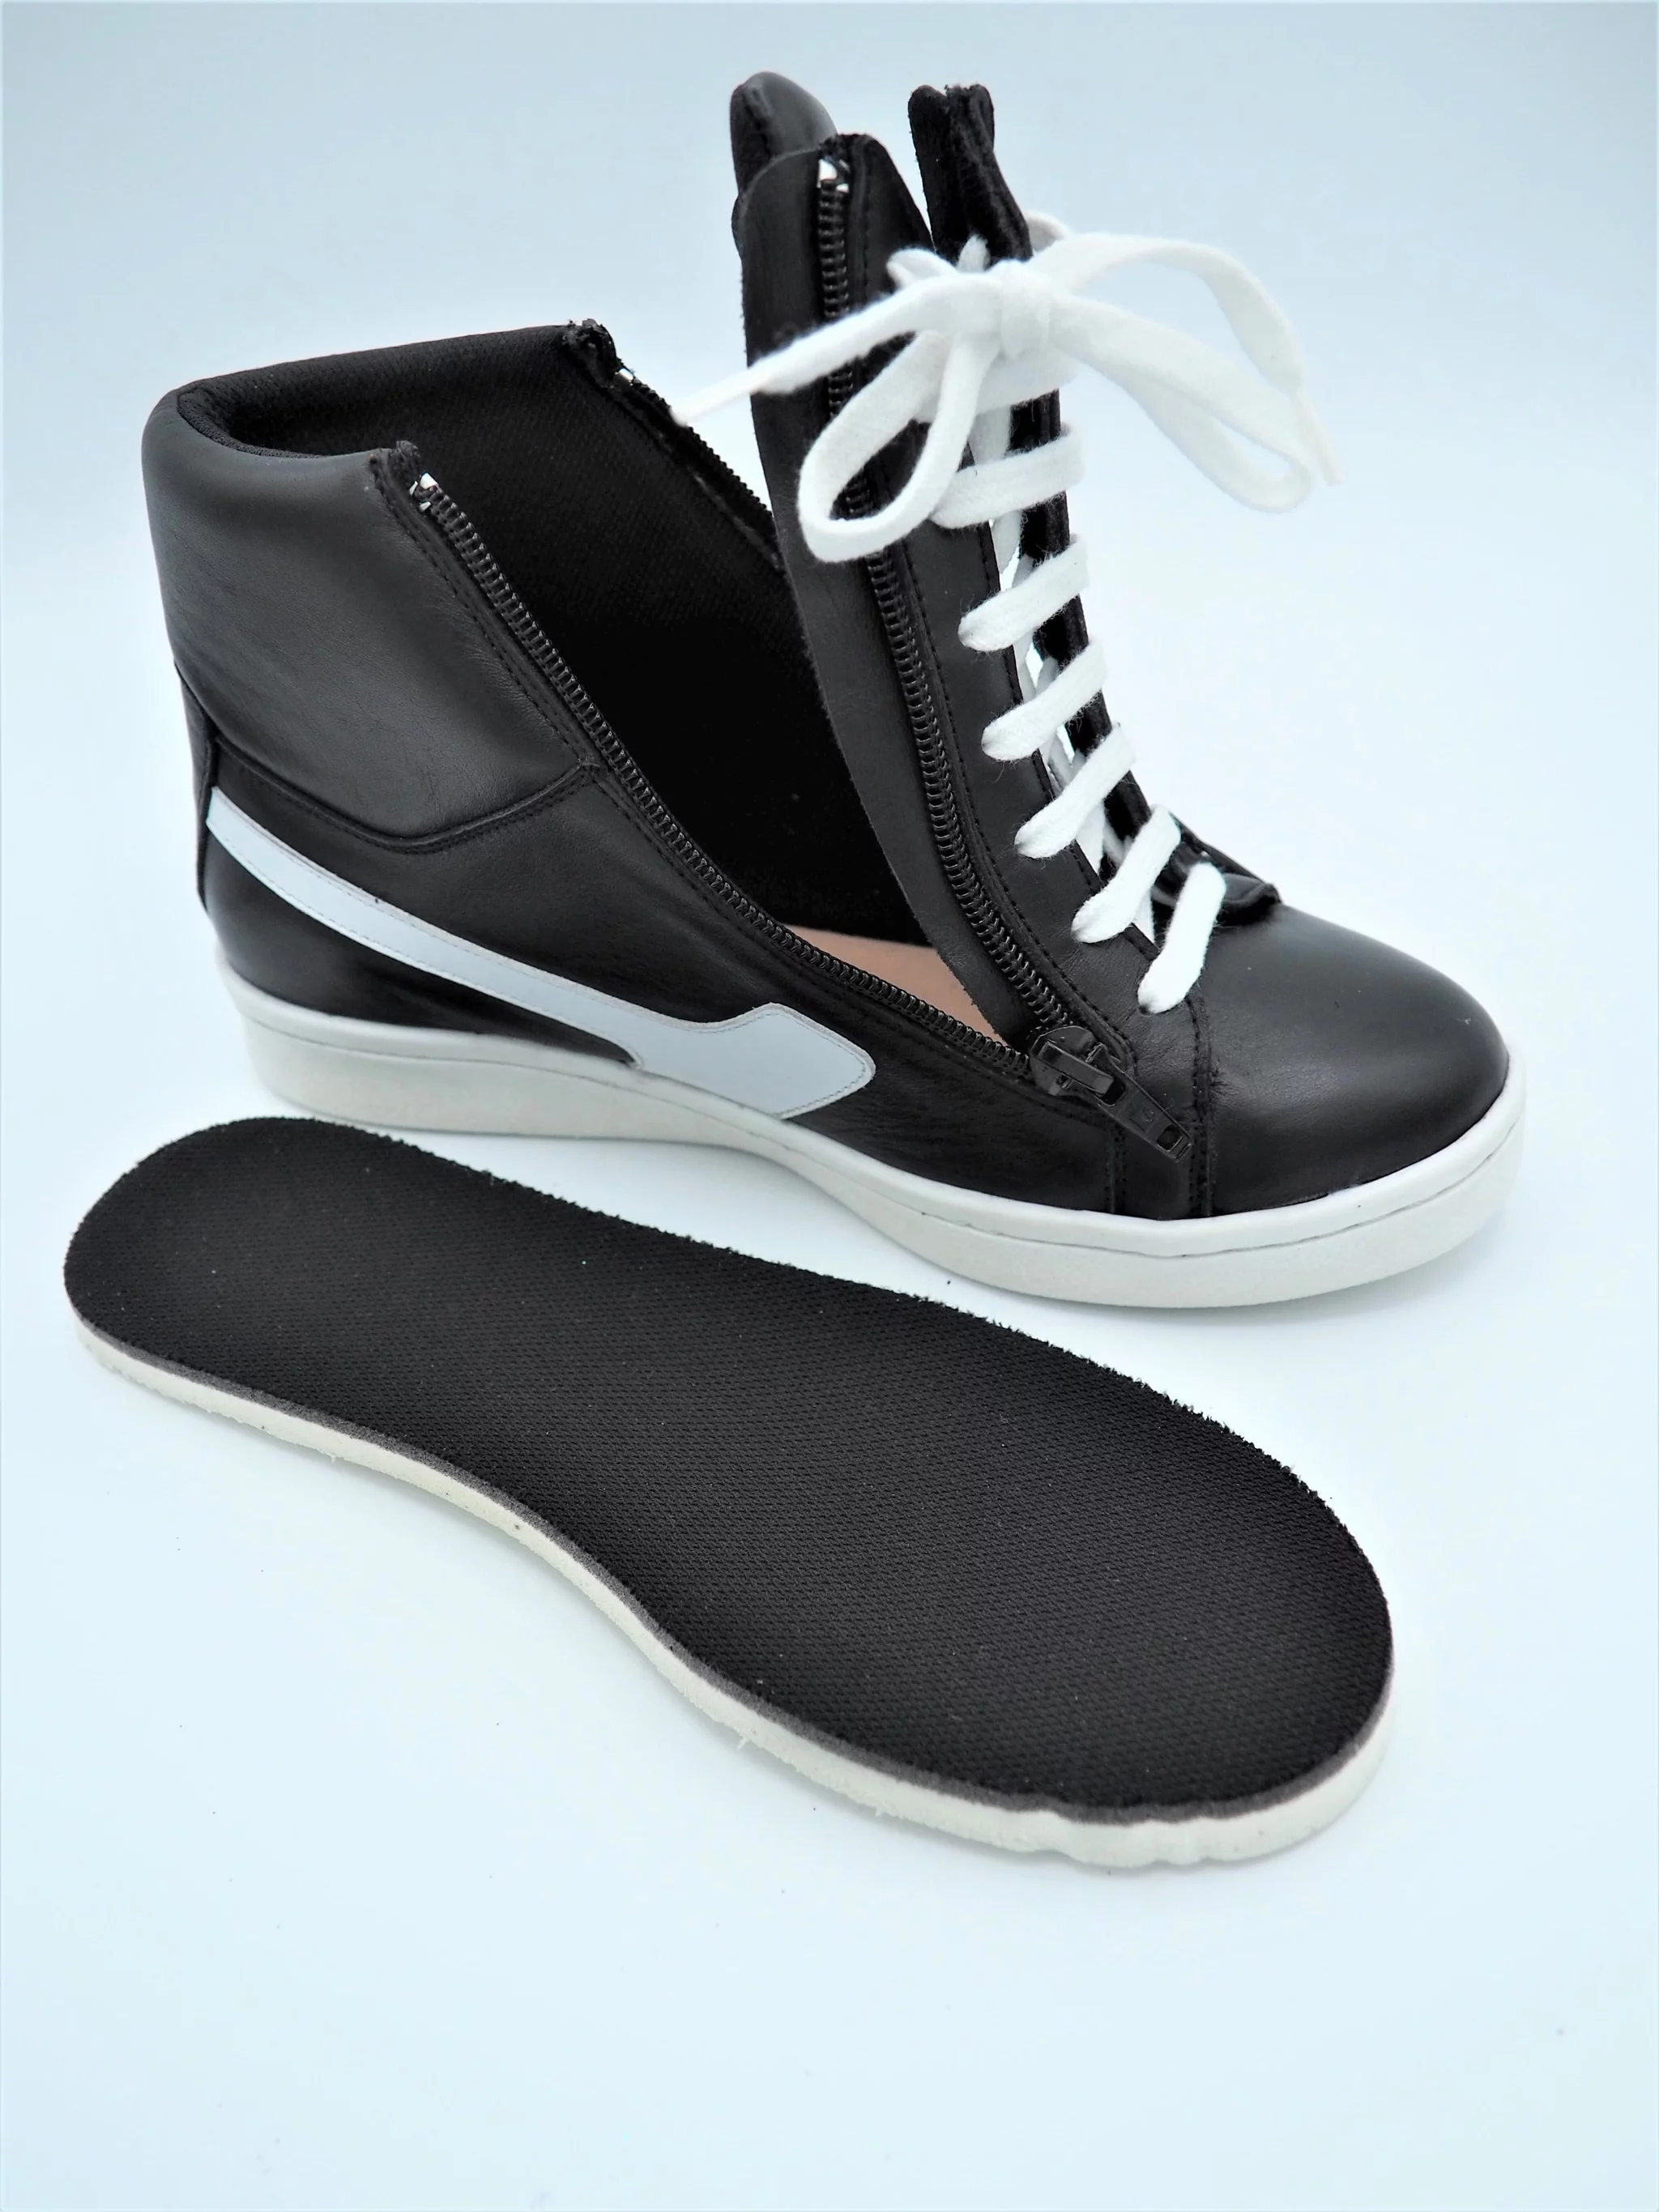 Modelo negro – Albertys Shoes